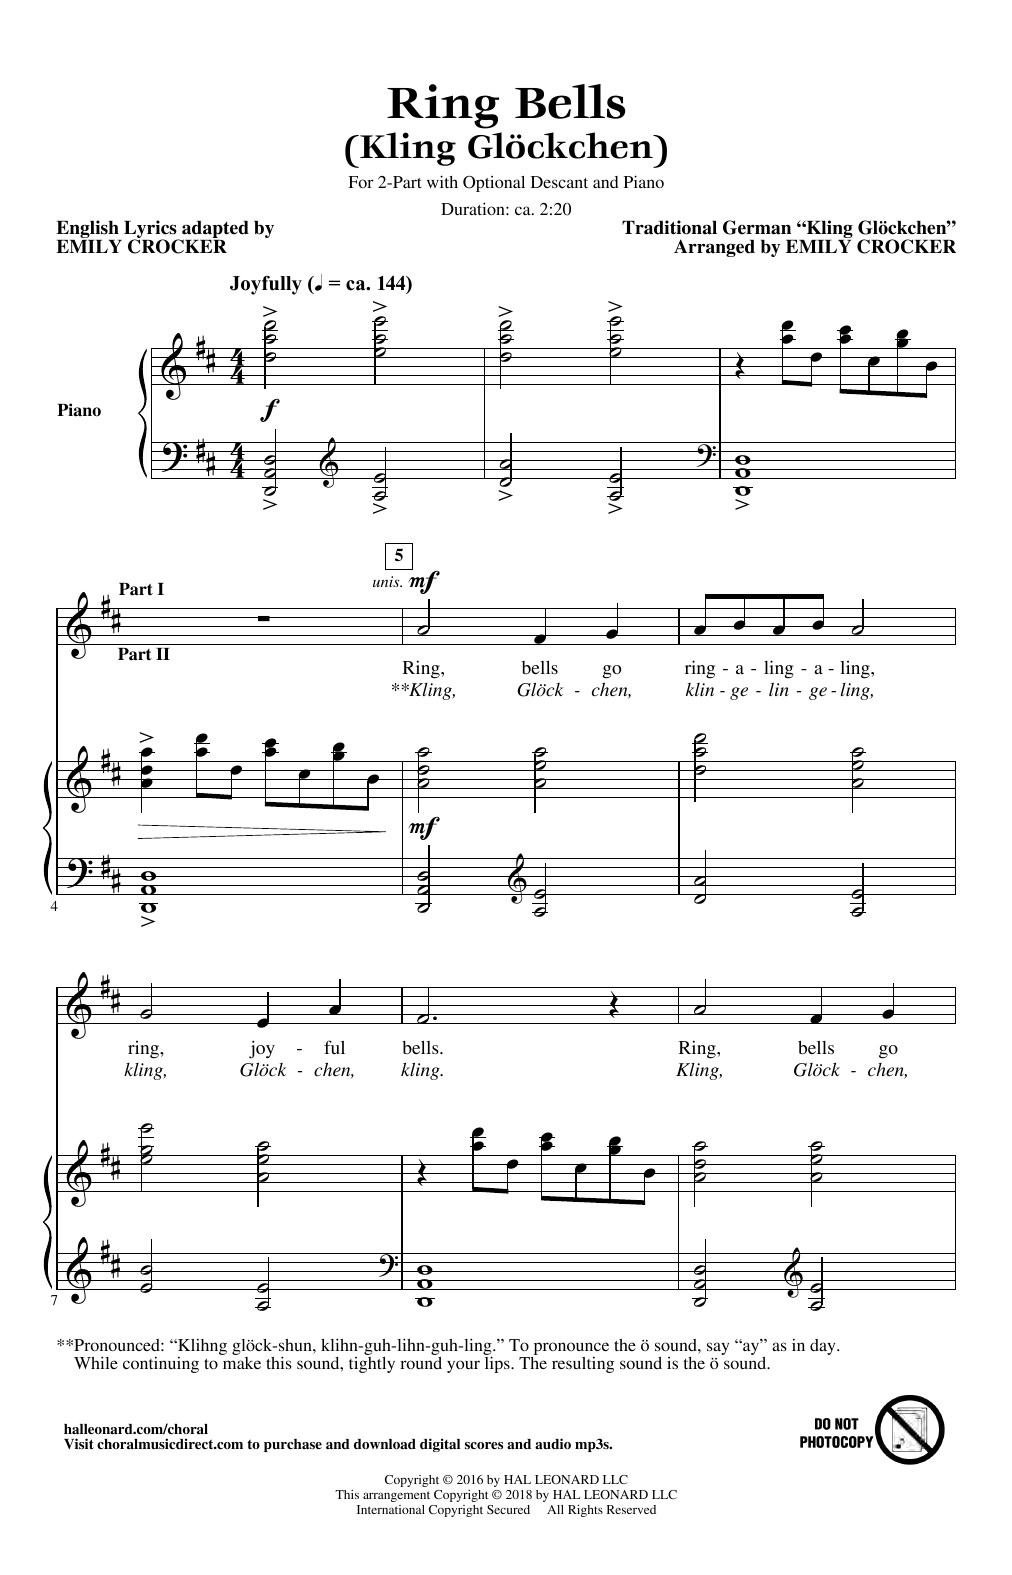 Emily Crocker Ring Bells (Kling Glockchen) Sheet Music Notes & Chords for 2-Part Choir - Download or Print PDF